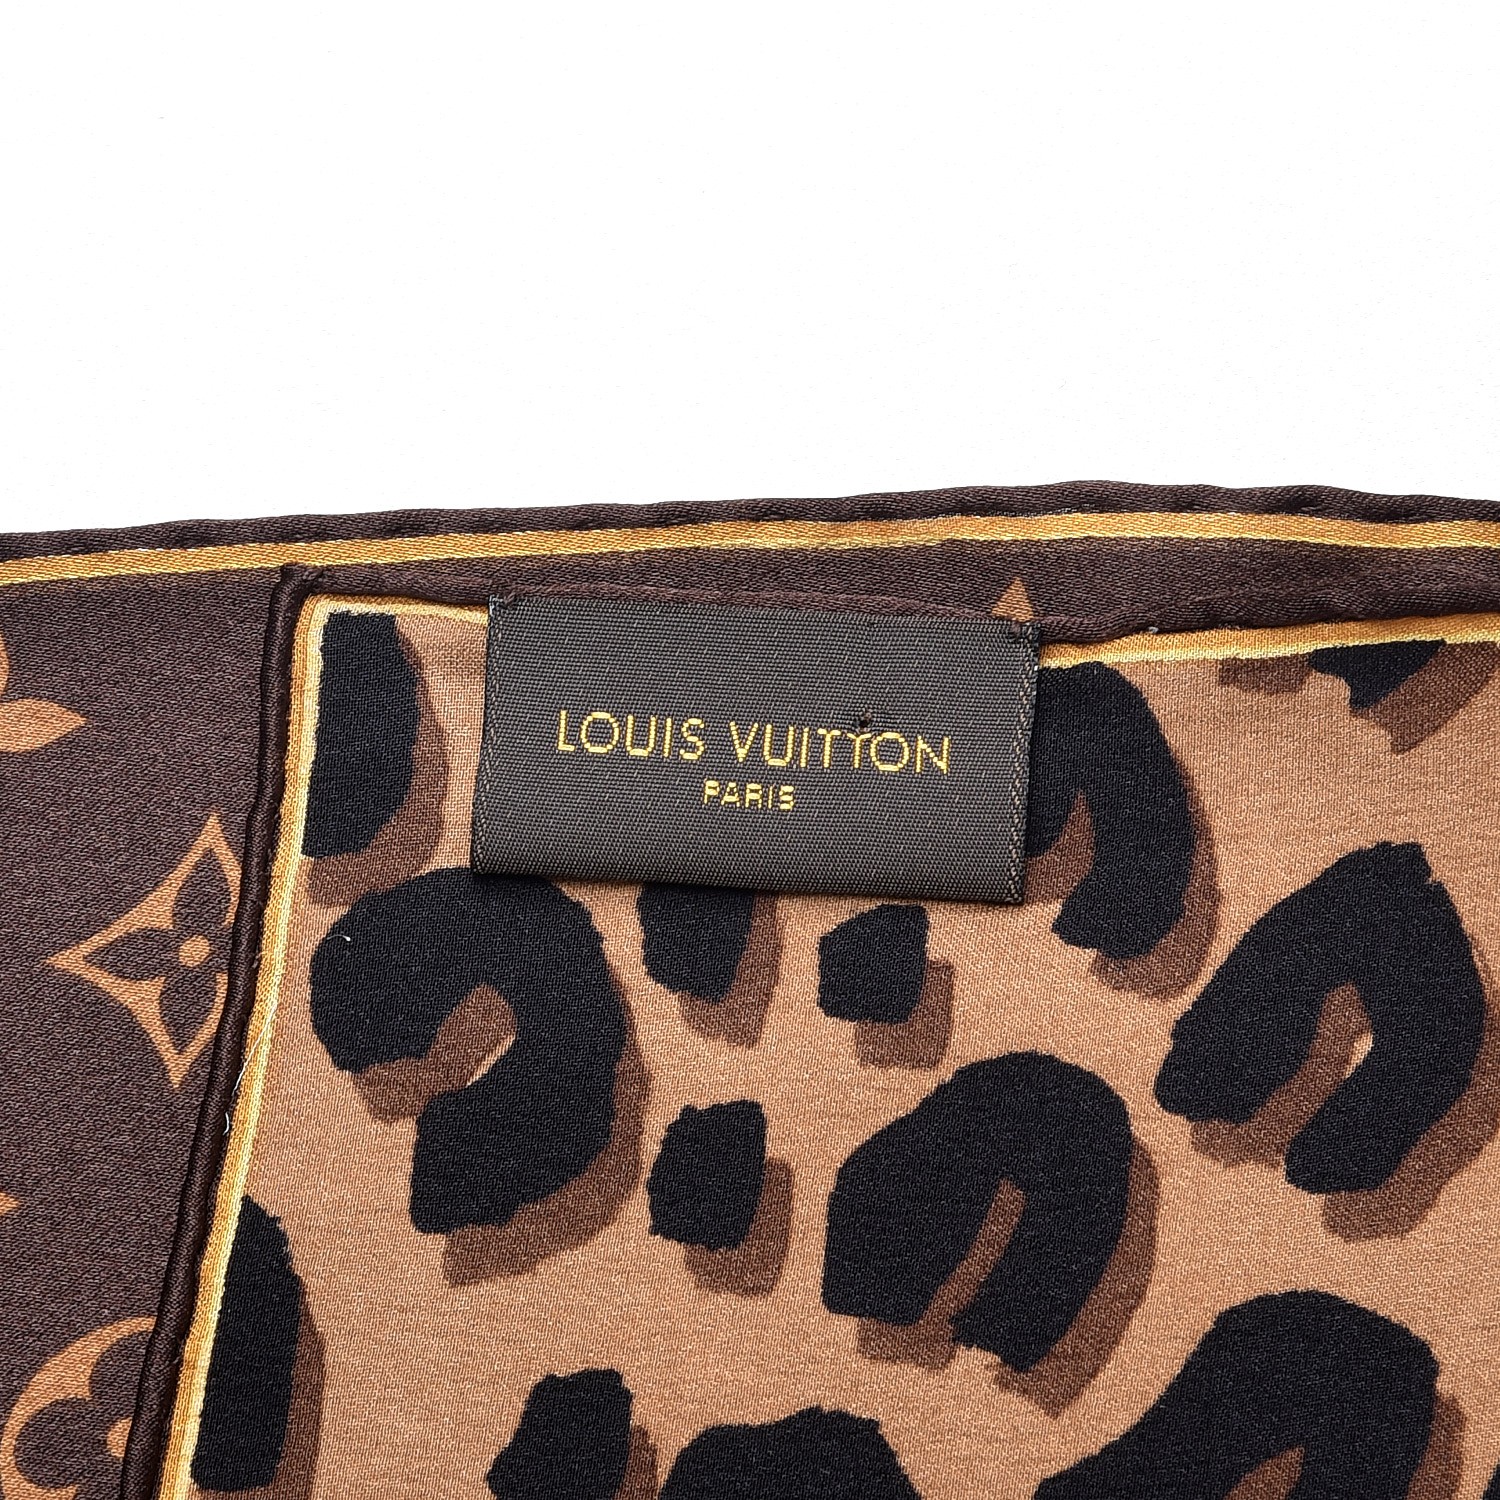 Louis Vuitton Brown Monogram and Animal Printed Silk Square Scarf